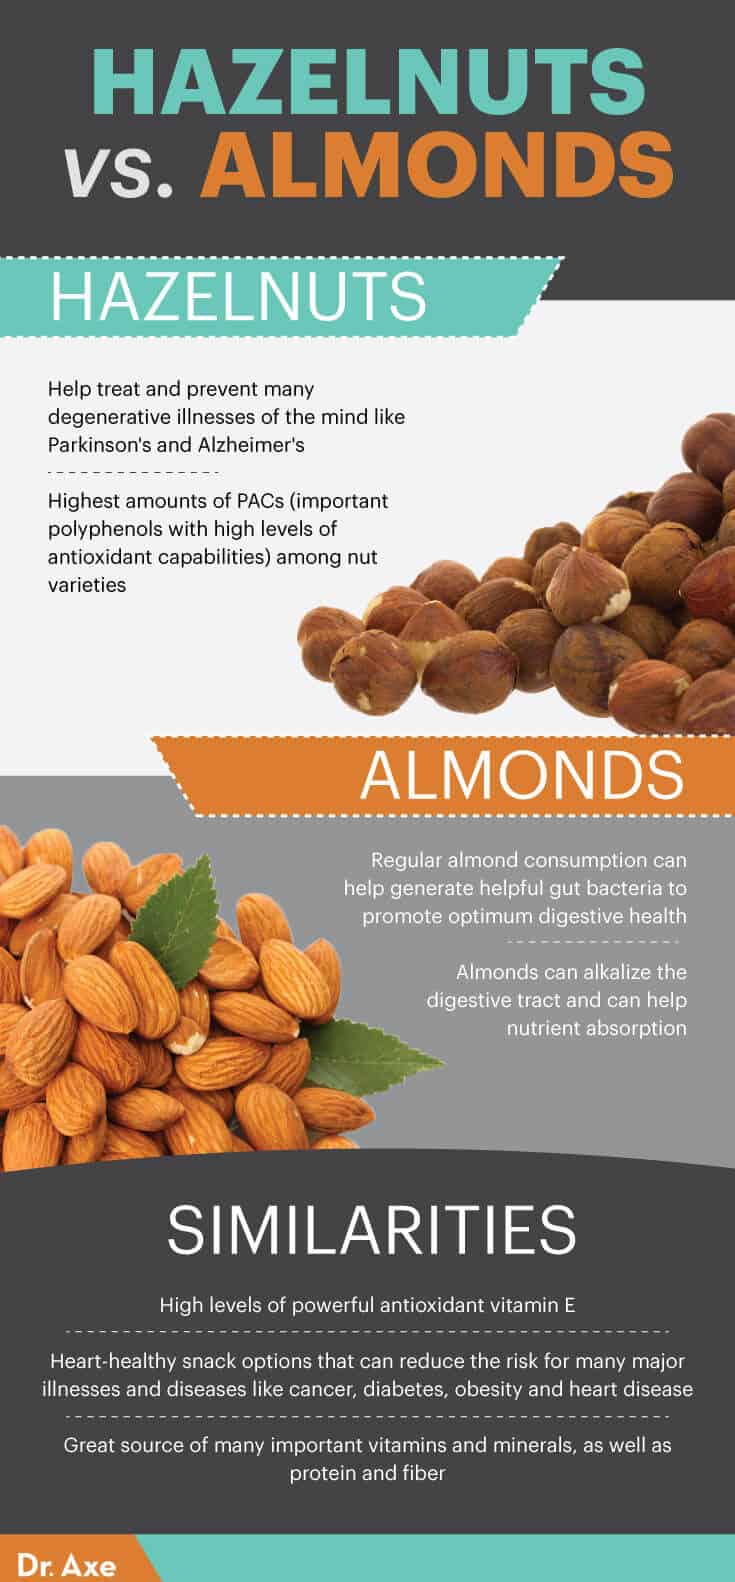 Hazelnuts vs. almonds - Dr. Axe